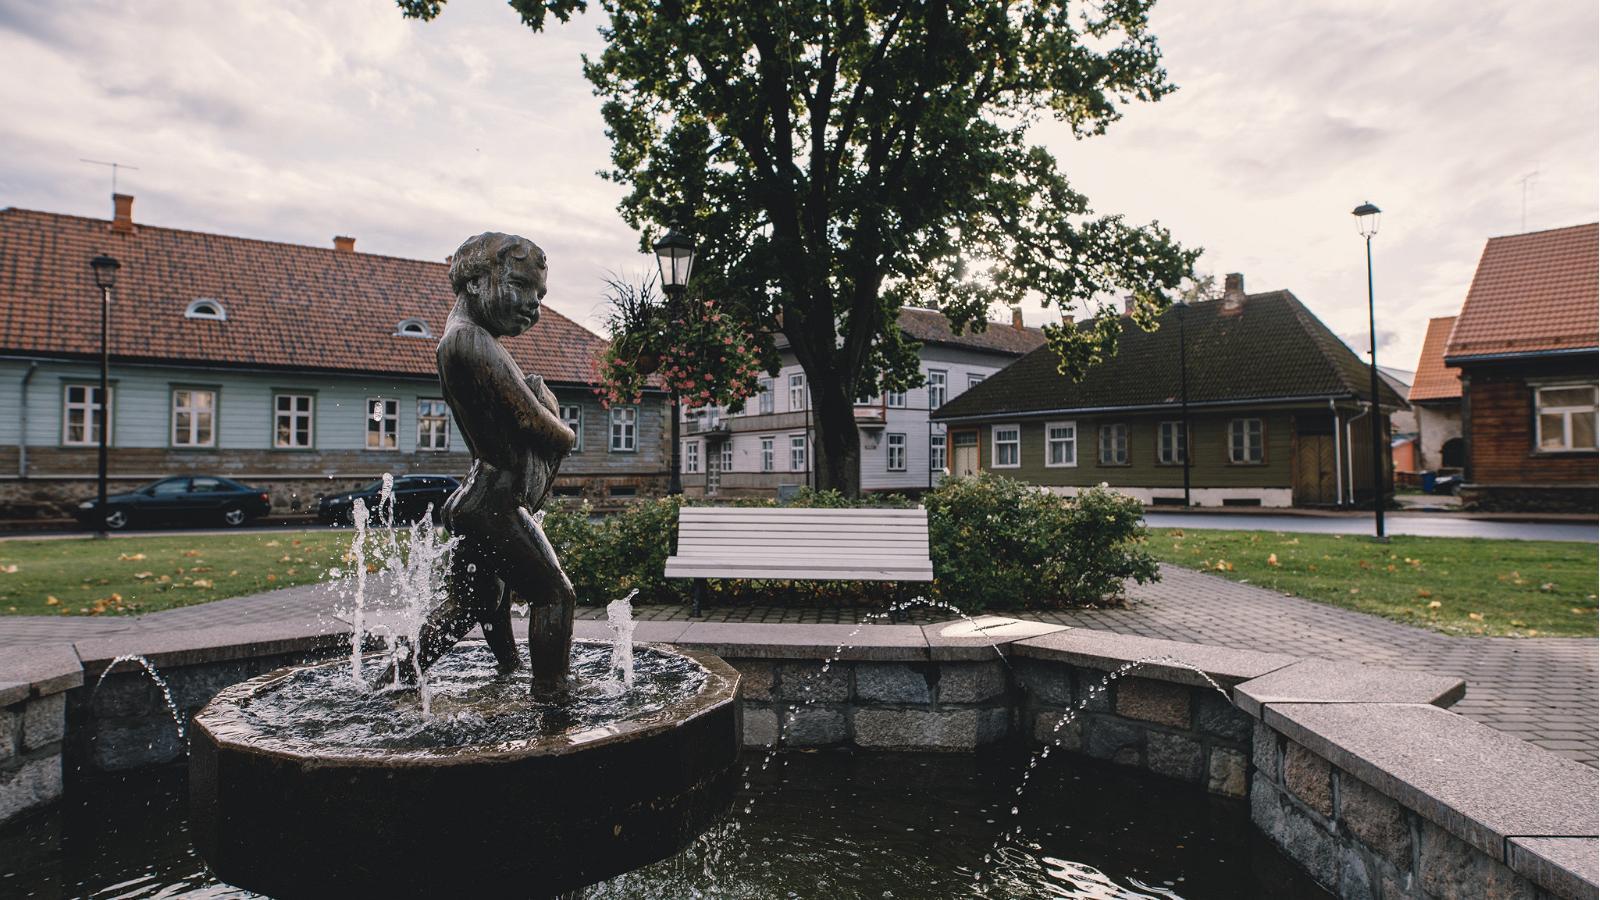 Sculpture ‘A boy with a fish’ on Johan Laidoner Square (Viljandi Turismiinfokeskus).